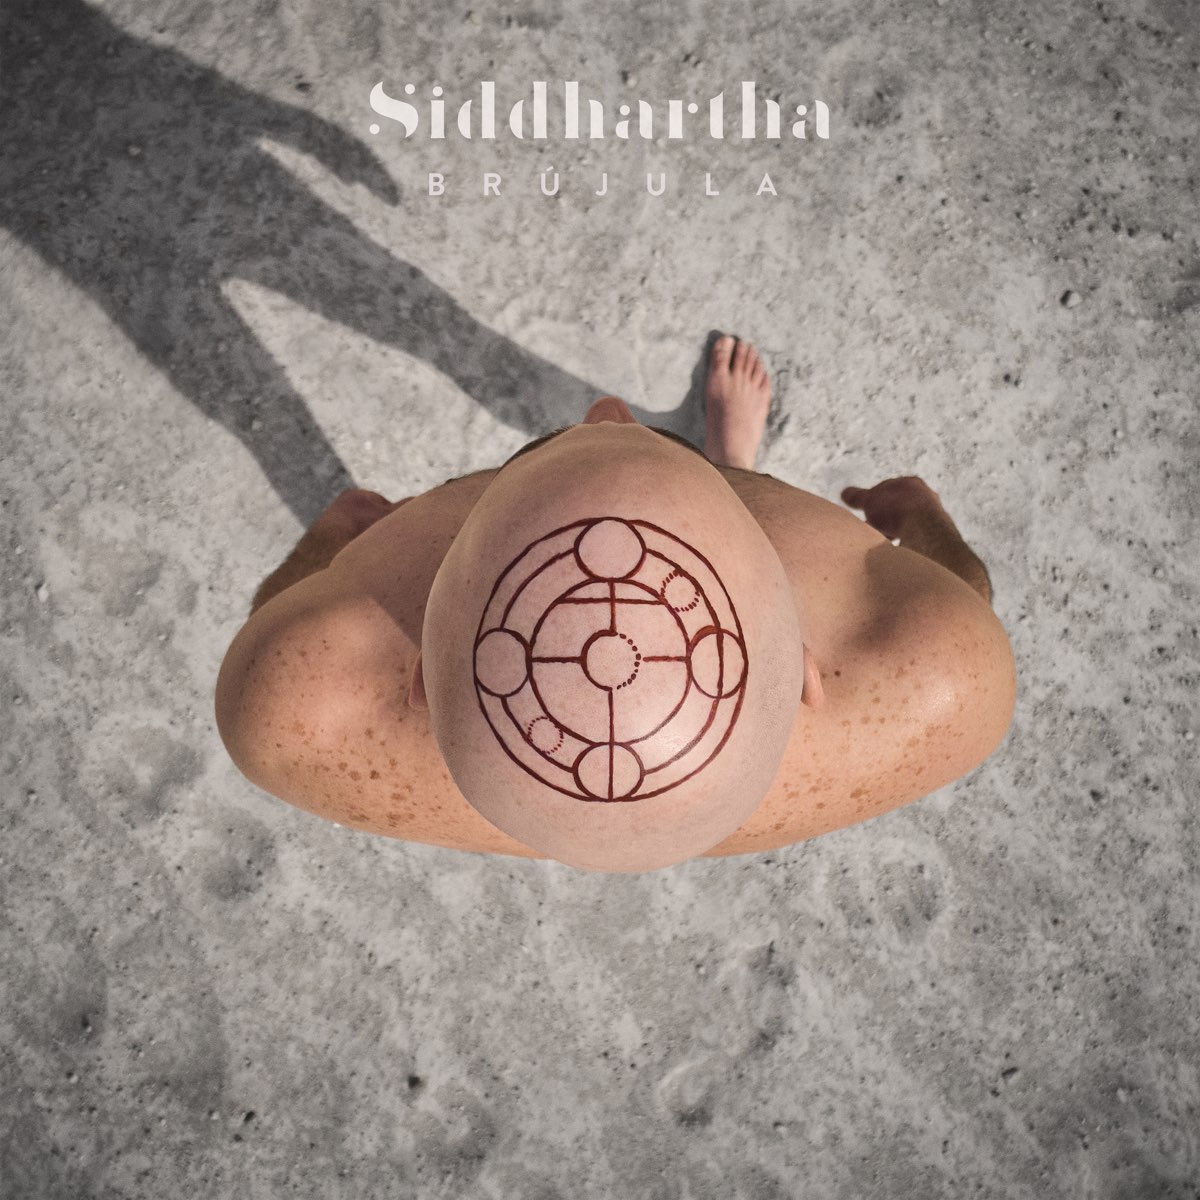 Siddhartha — Brújula cover artwork